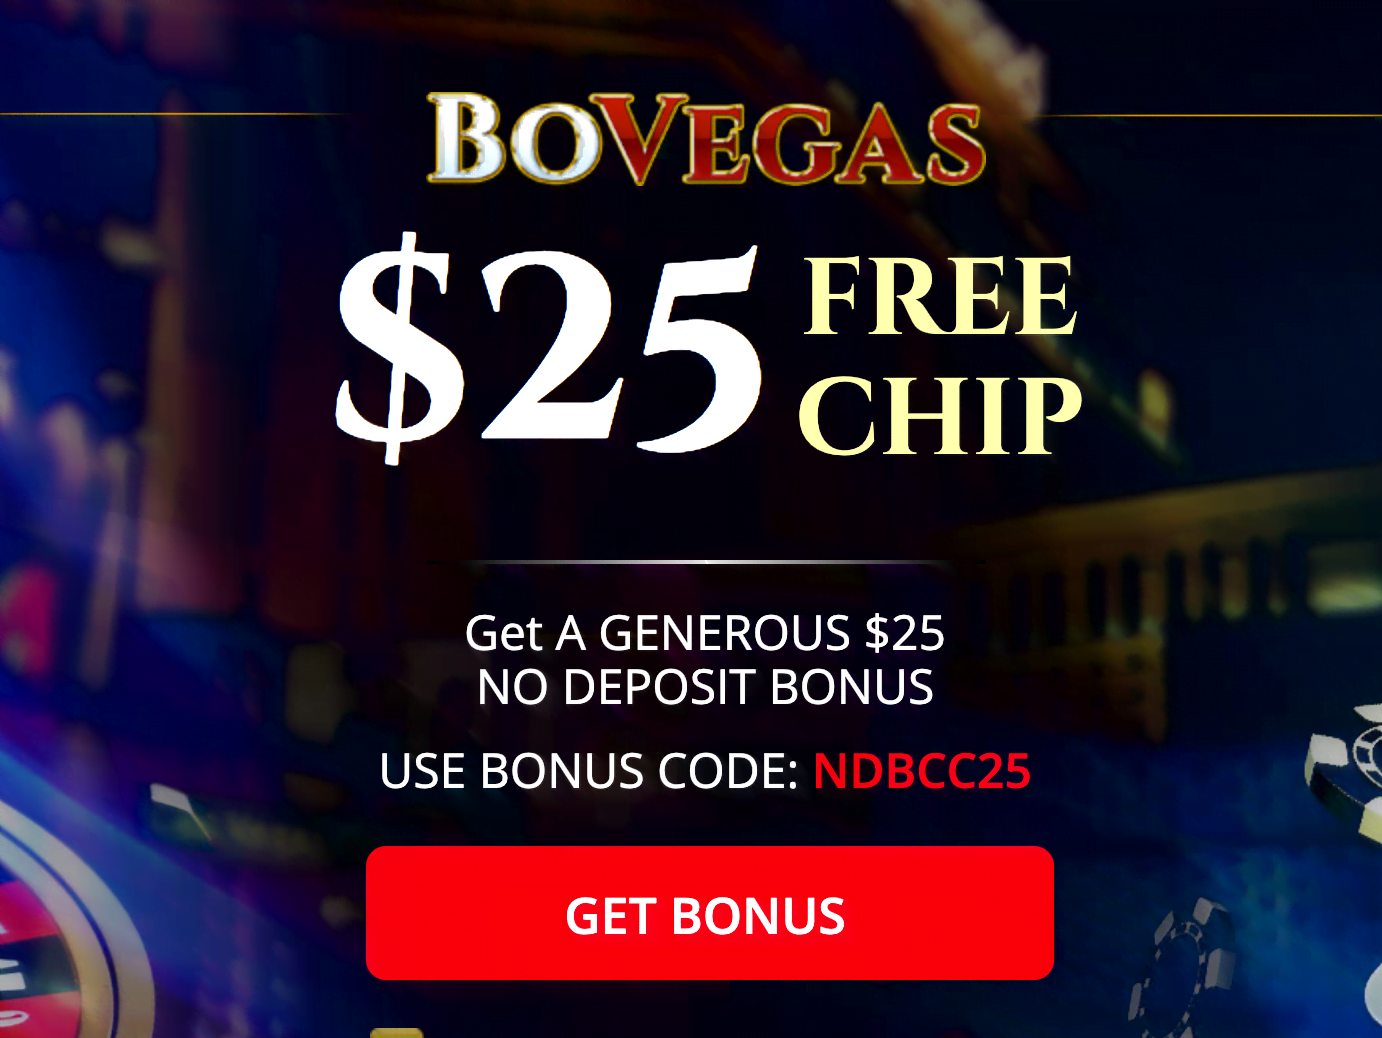 Bovegas casino login page